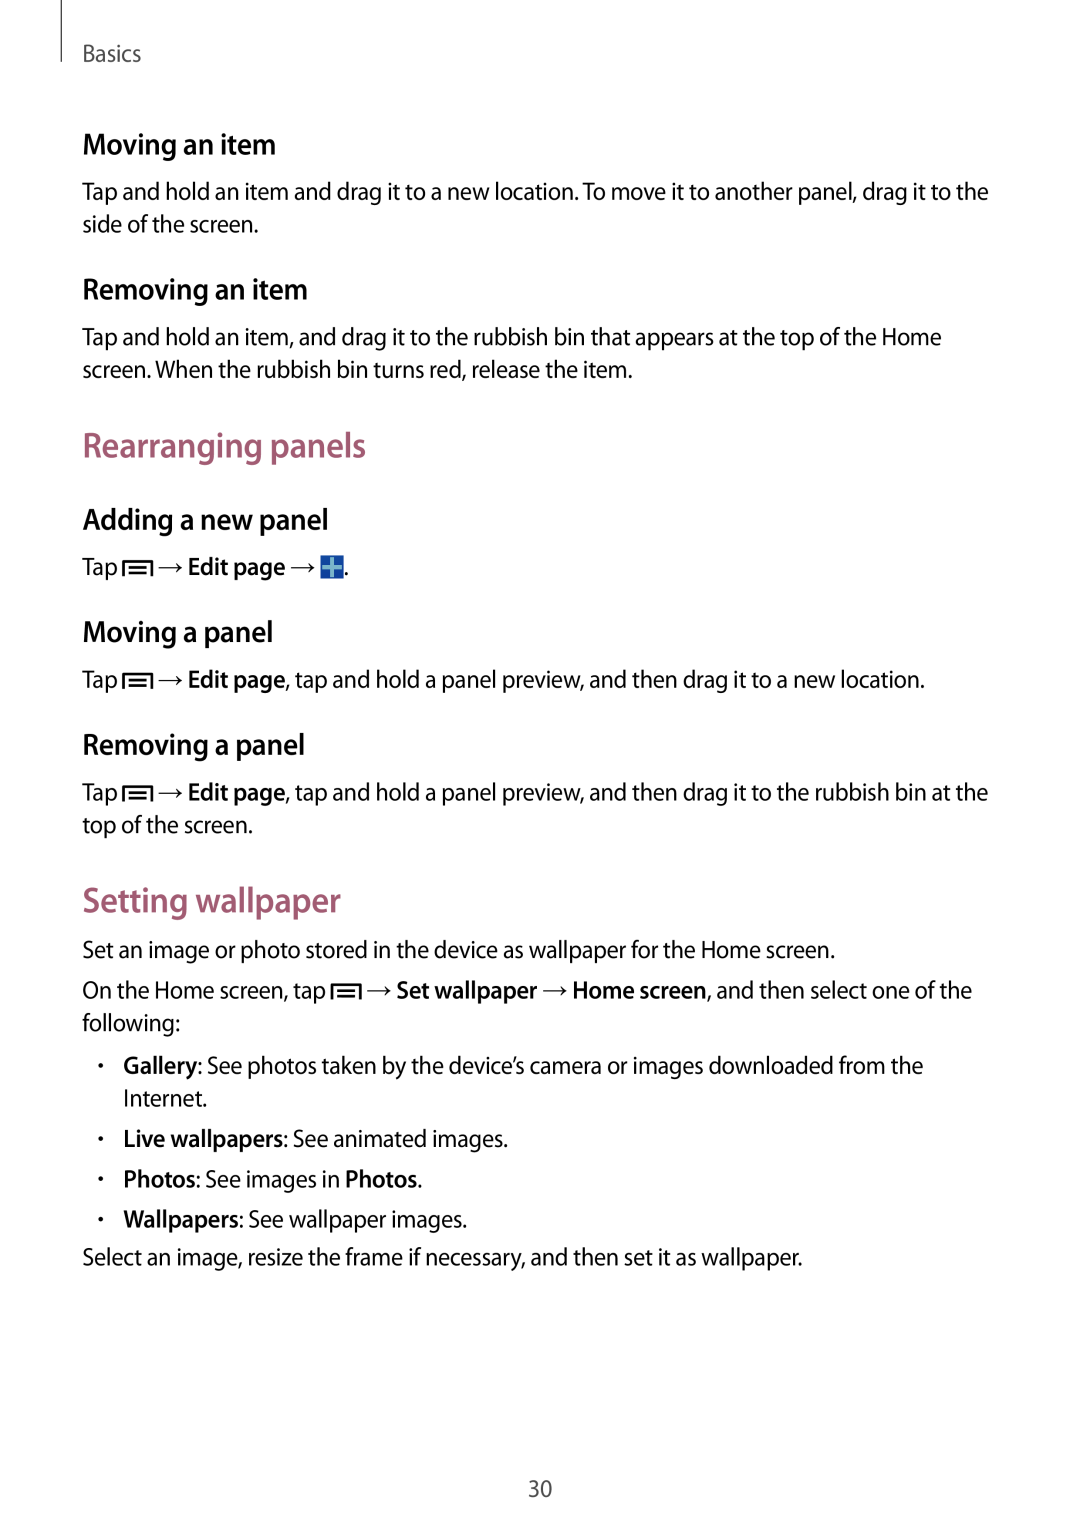 Samsung SM-T3150MKADBT Rearranging panels, Setting wallpaper, Moving an item, Removing an item, Adding a new panel, Basics 